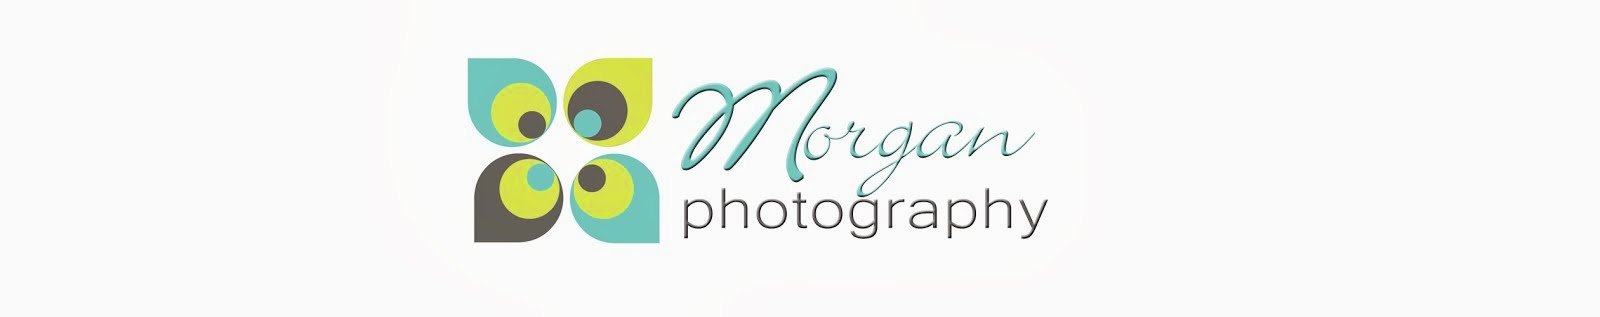 Morgan Photography